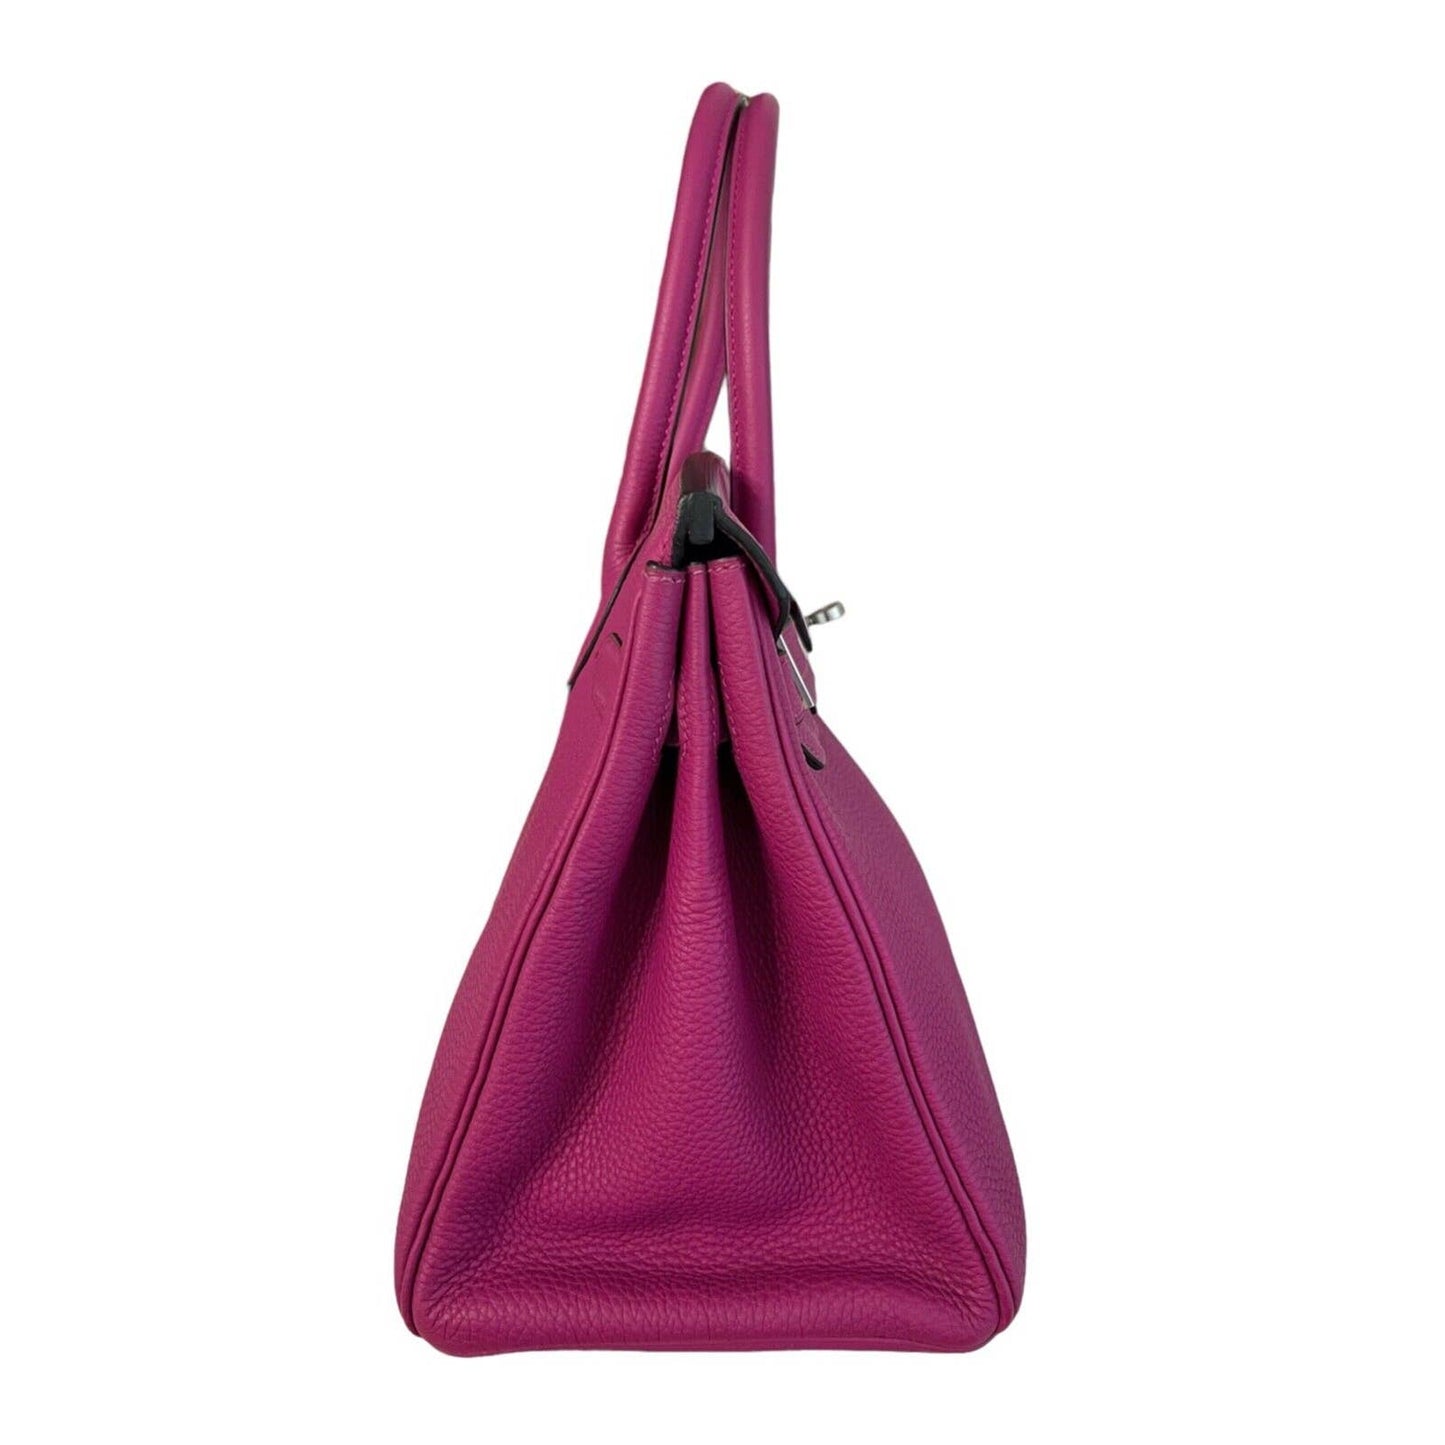 Hermes Birkin 30 Rose Pourpre Pink Purple Bag Handbag Palladium Hardware 2020